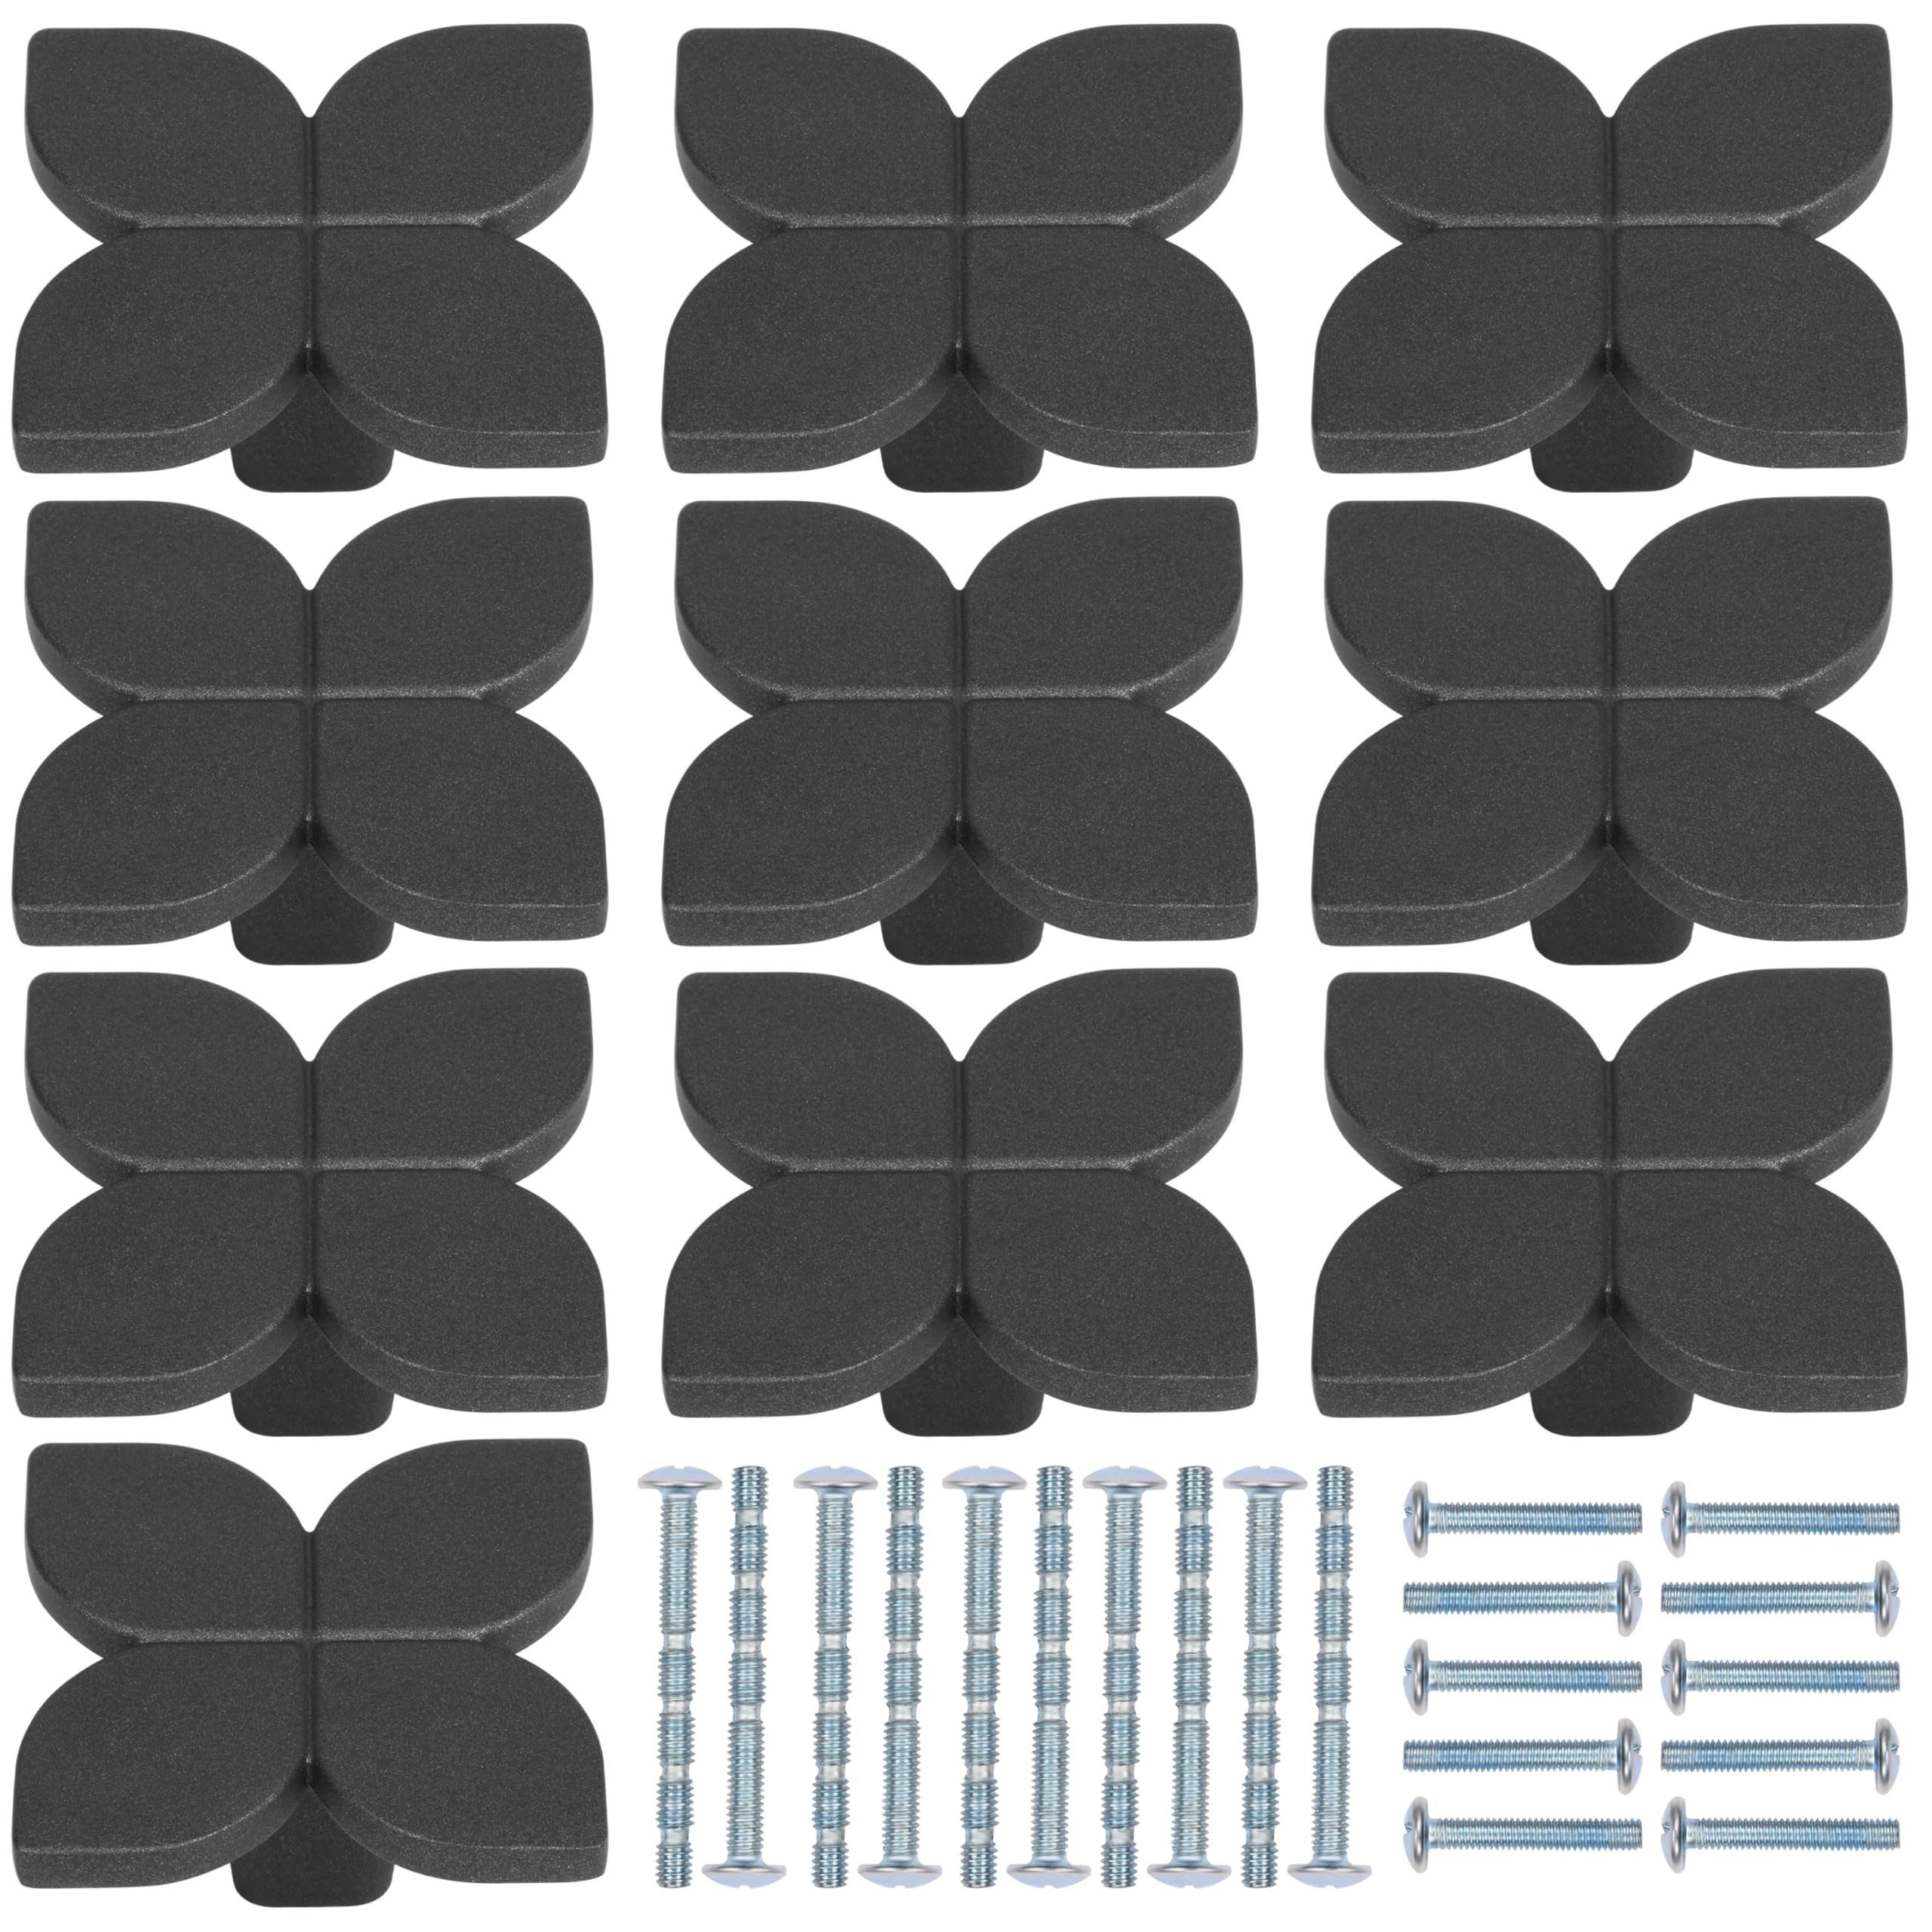 Kurtzy Dekoobjekt Kurtzy 10 Stück Schubladenknöpfe in Blattform – 42 x 23 mm Möbelknöpfe